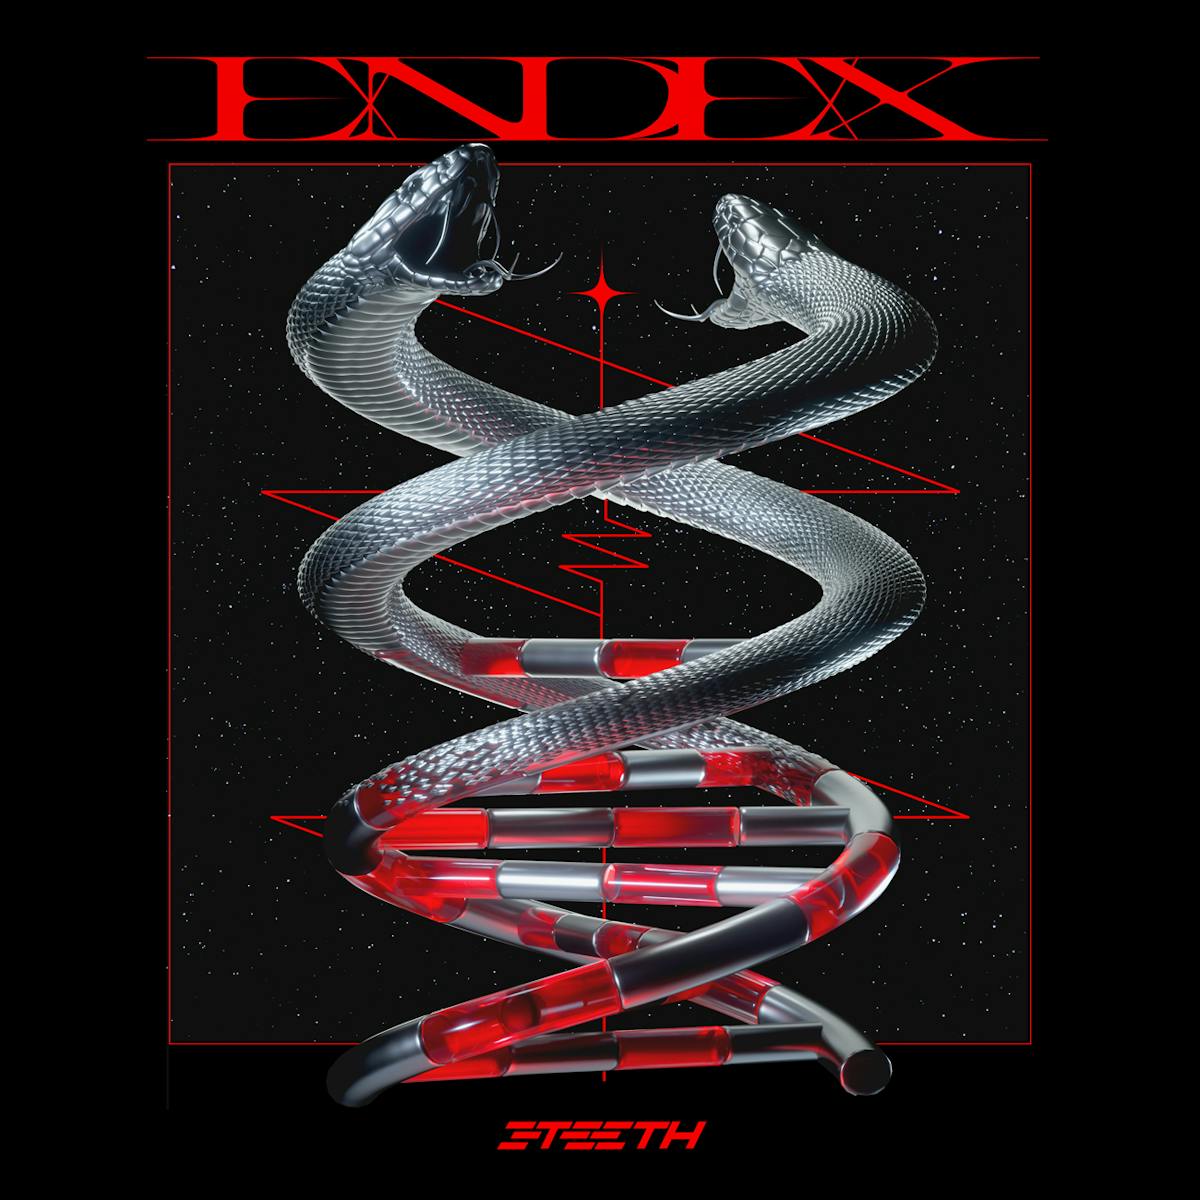 3TEETH announce new album EndEx Kerrang!